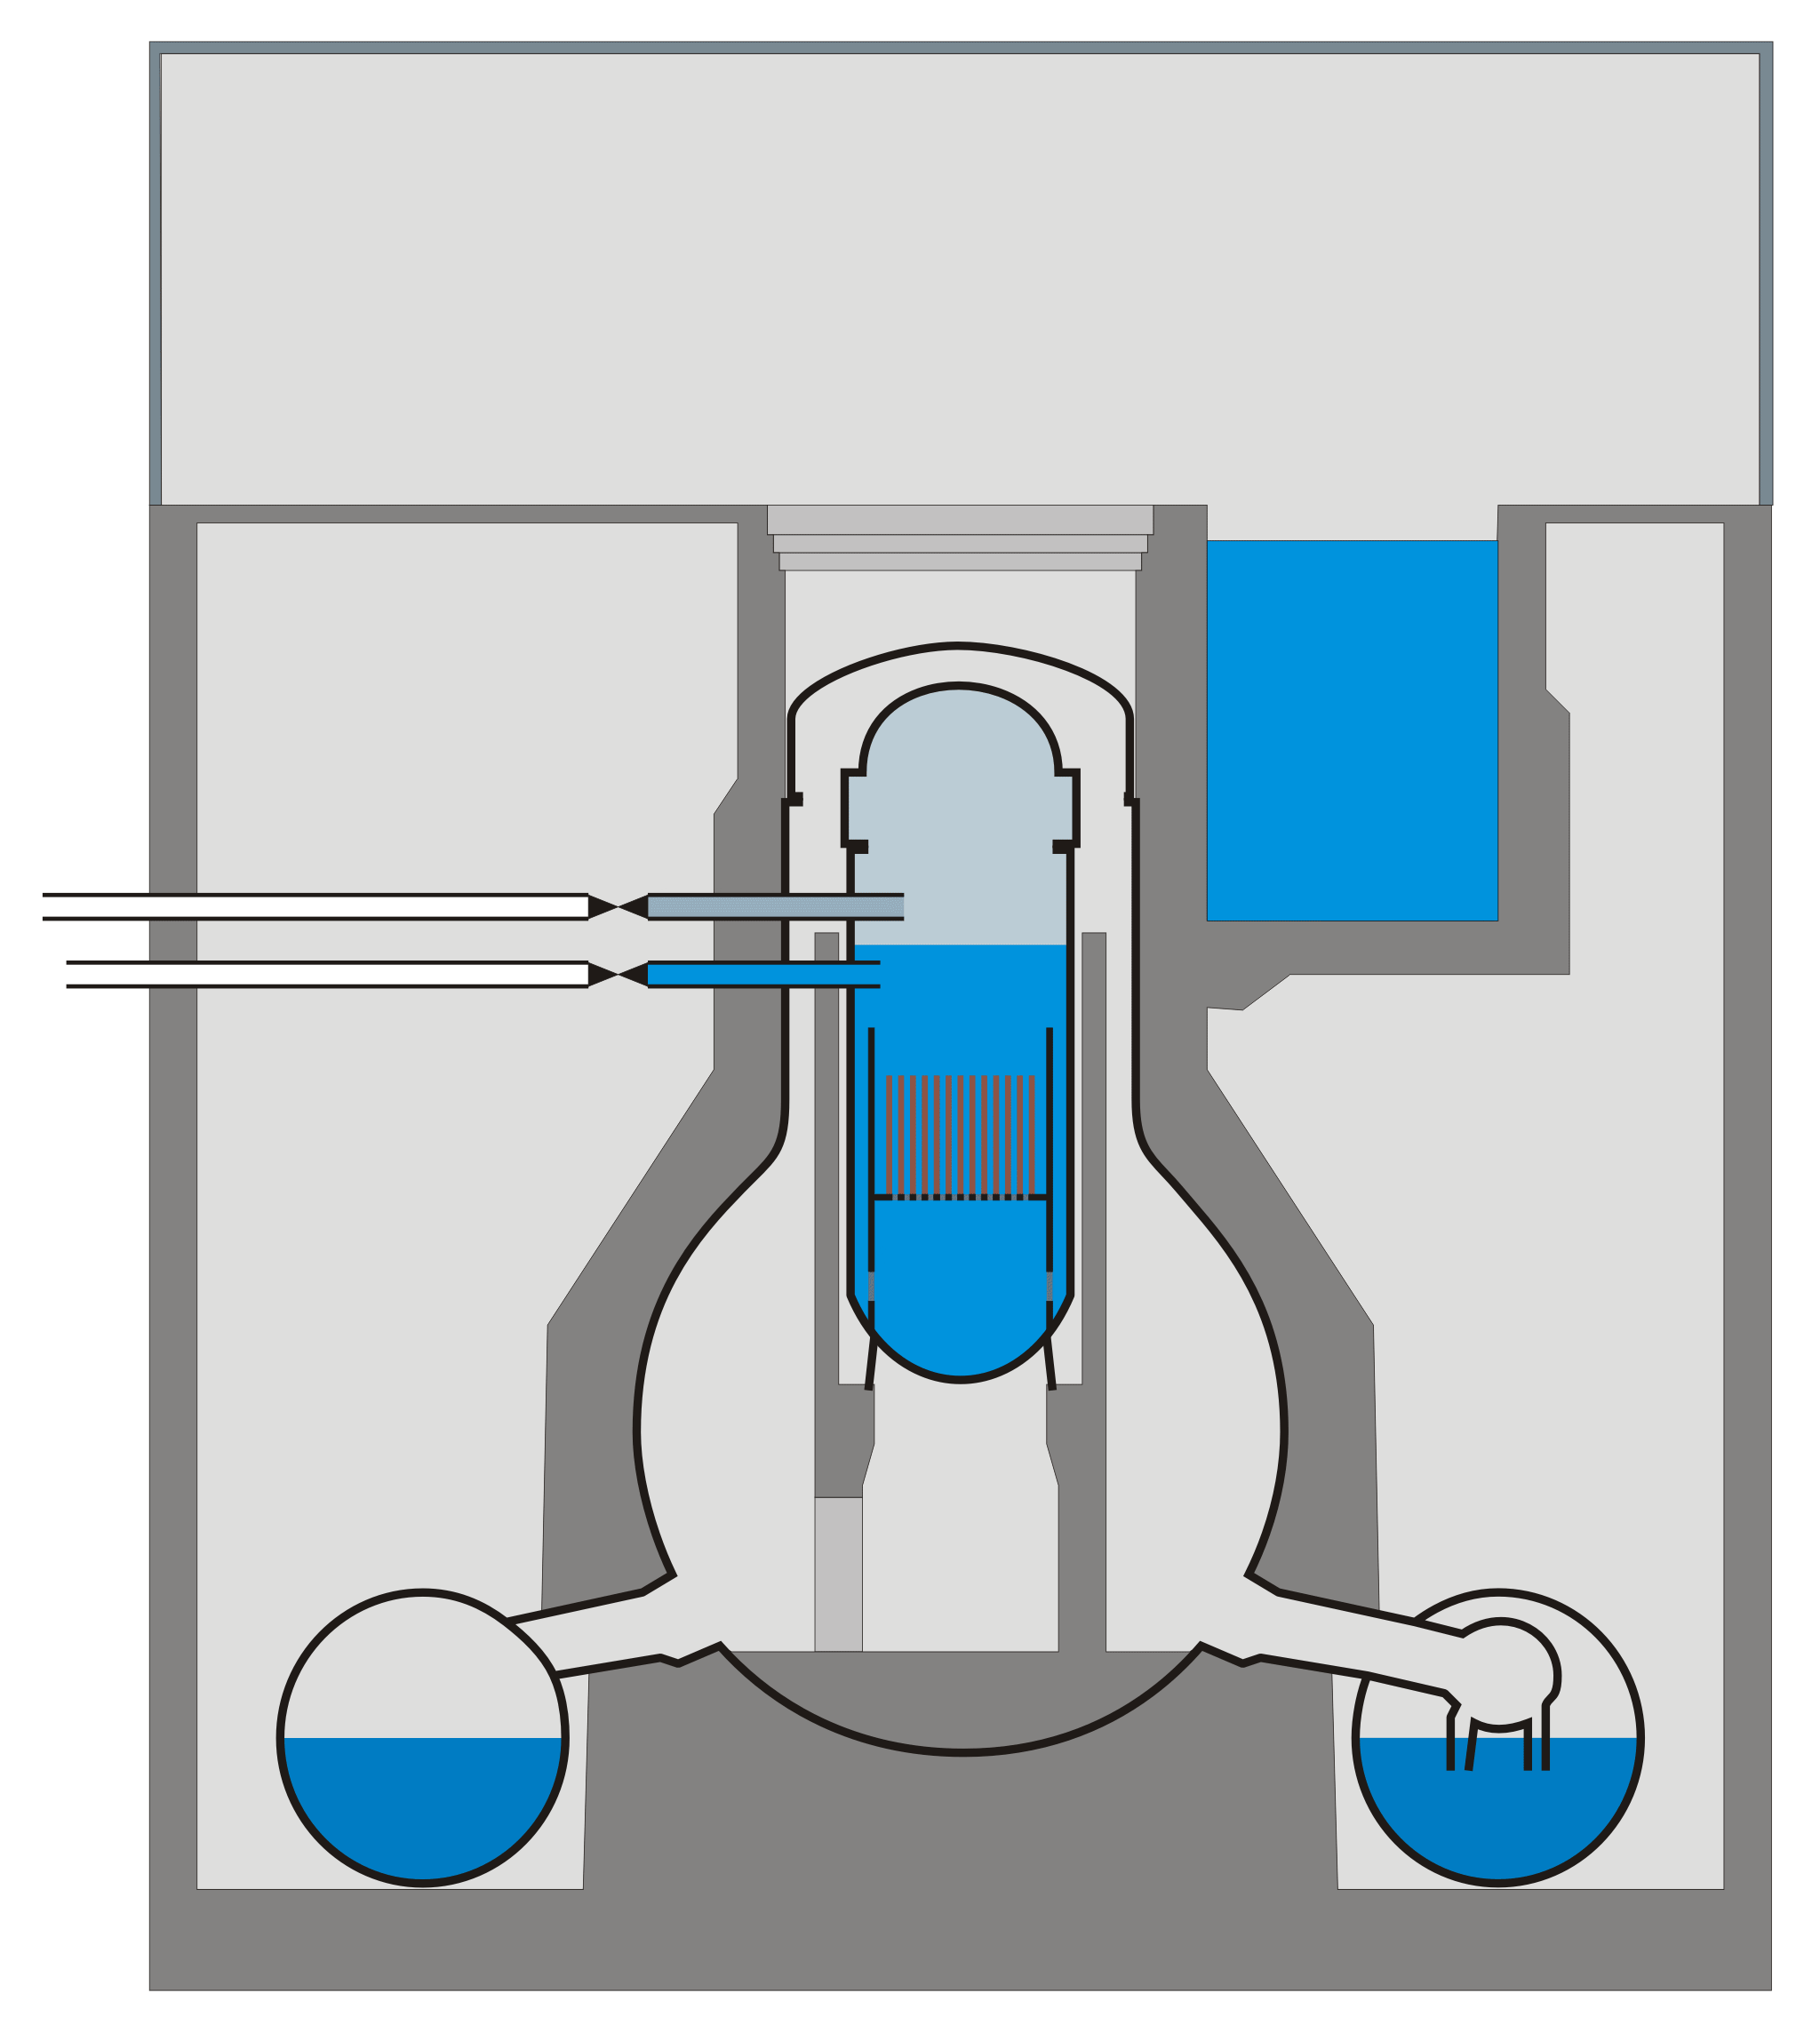 Feedwater Line BWR-4 üzemzavari hőtırendszerei (ECCS) ADS Main Steam Line Reacto r Core D/G HPCI CS CS LPCI LPCI LPCI LPCI RCIC D/G Nagynyomású ZÜHR - High Pressure Emergency Core Cooling Systems